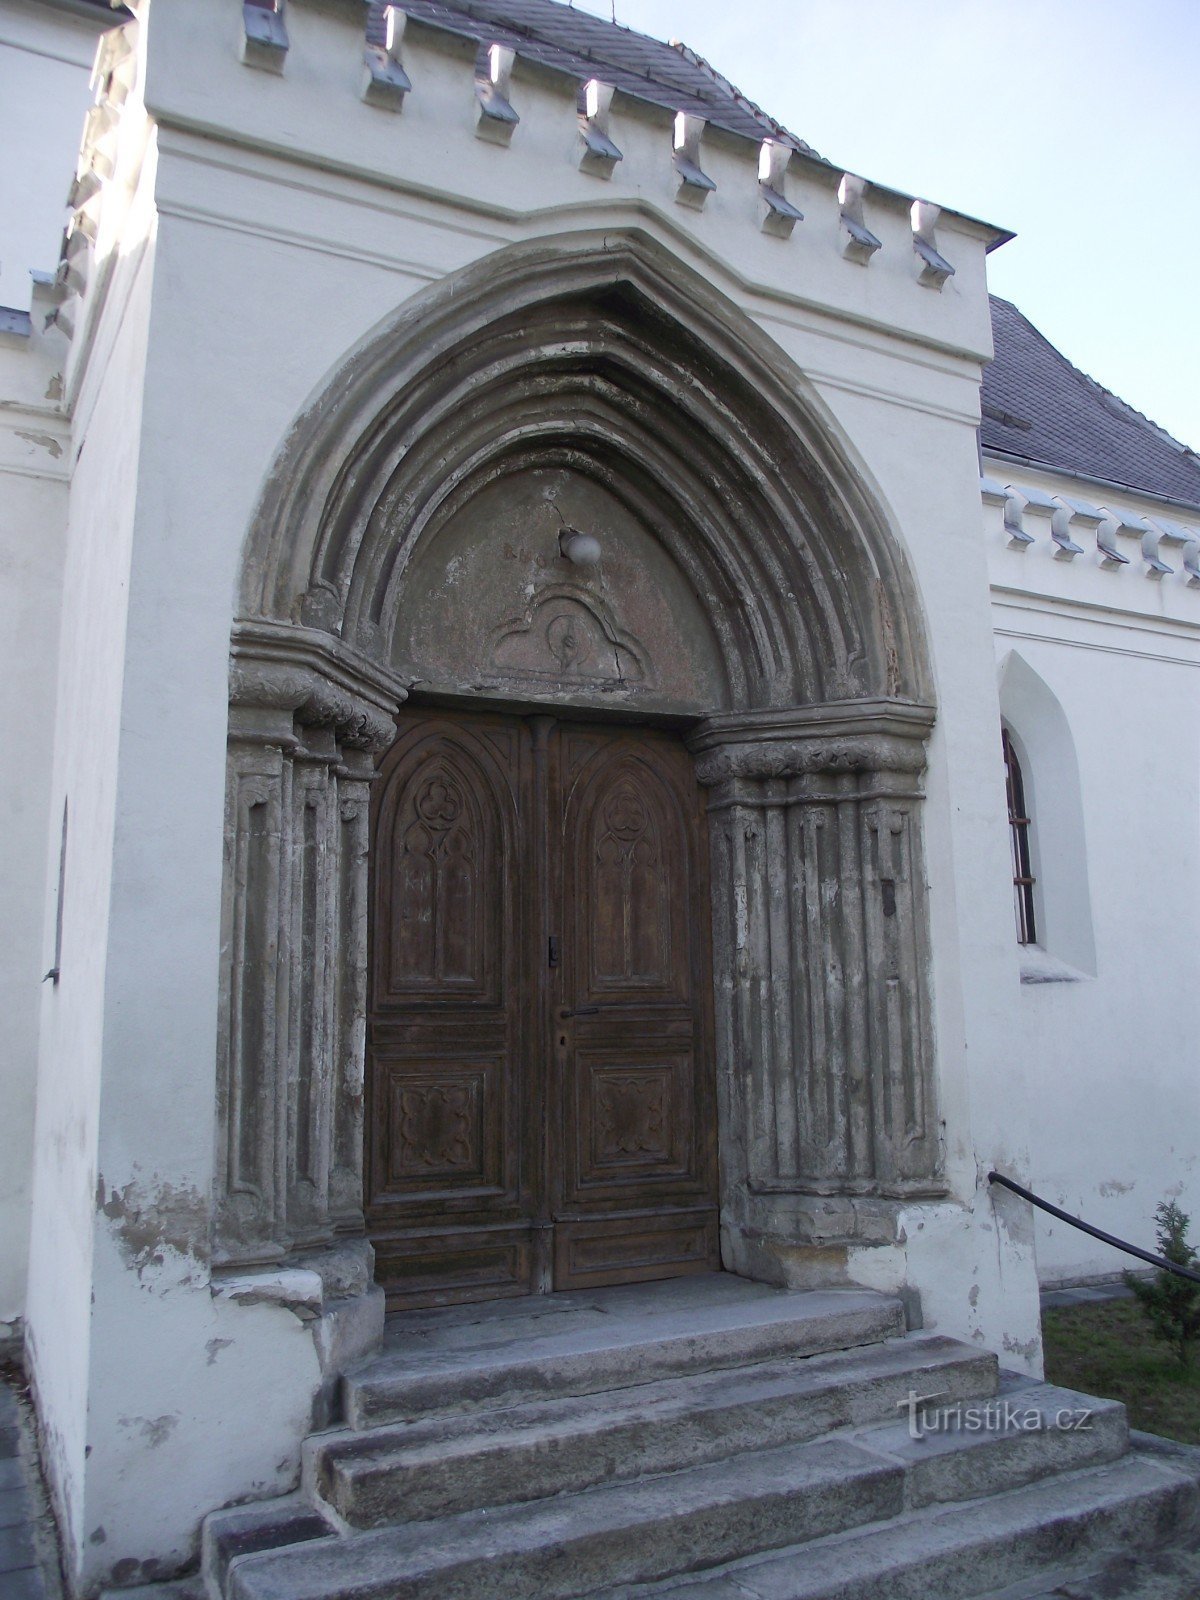 Romanesque-Gothic portal